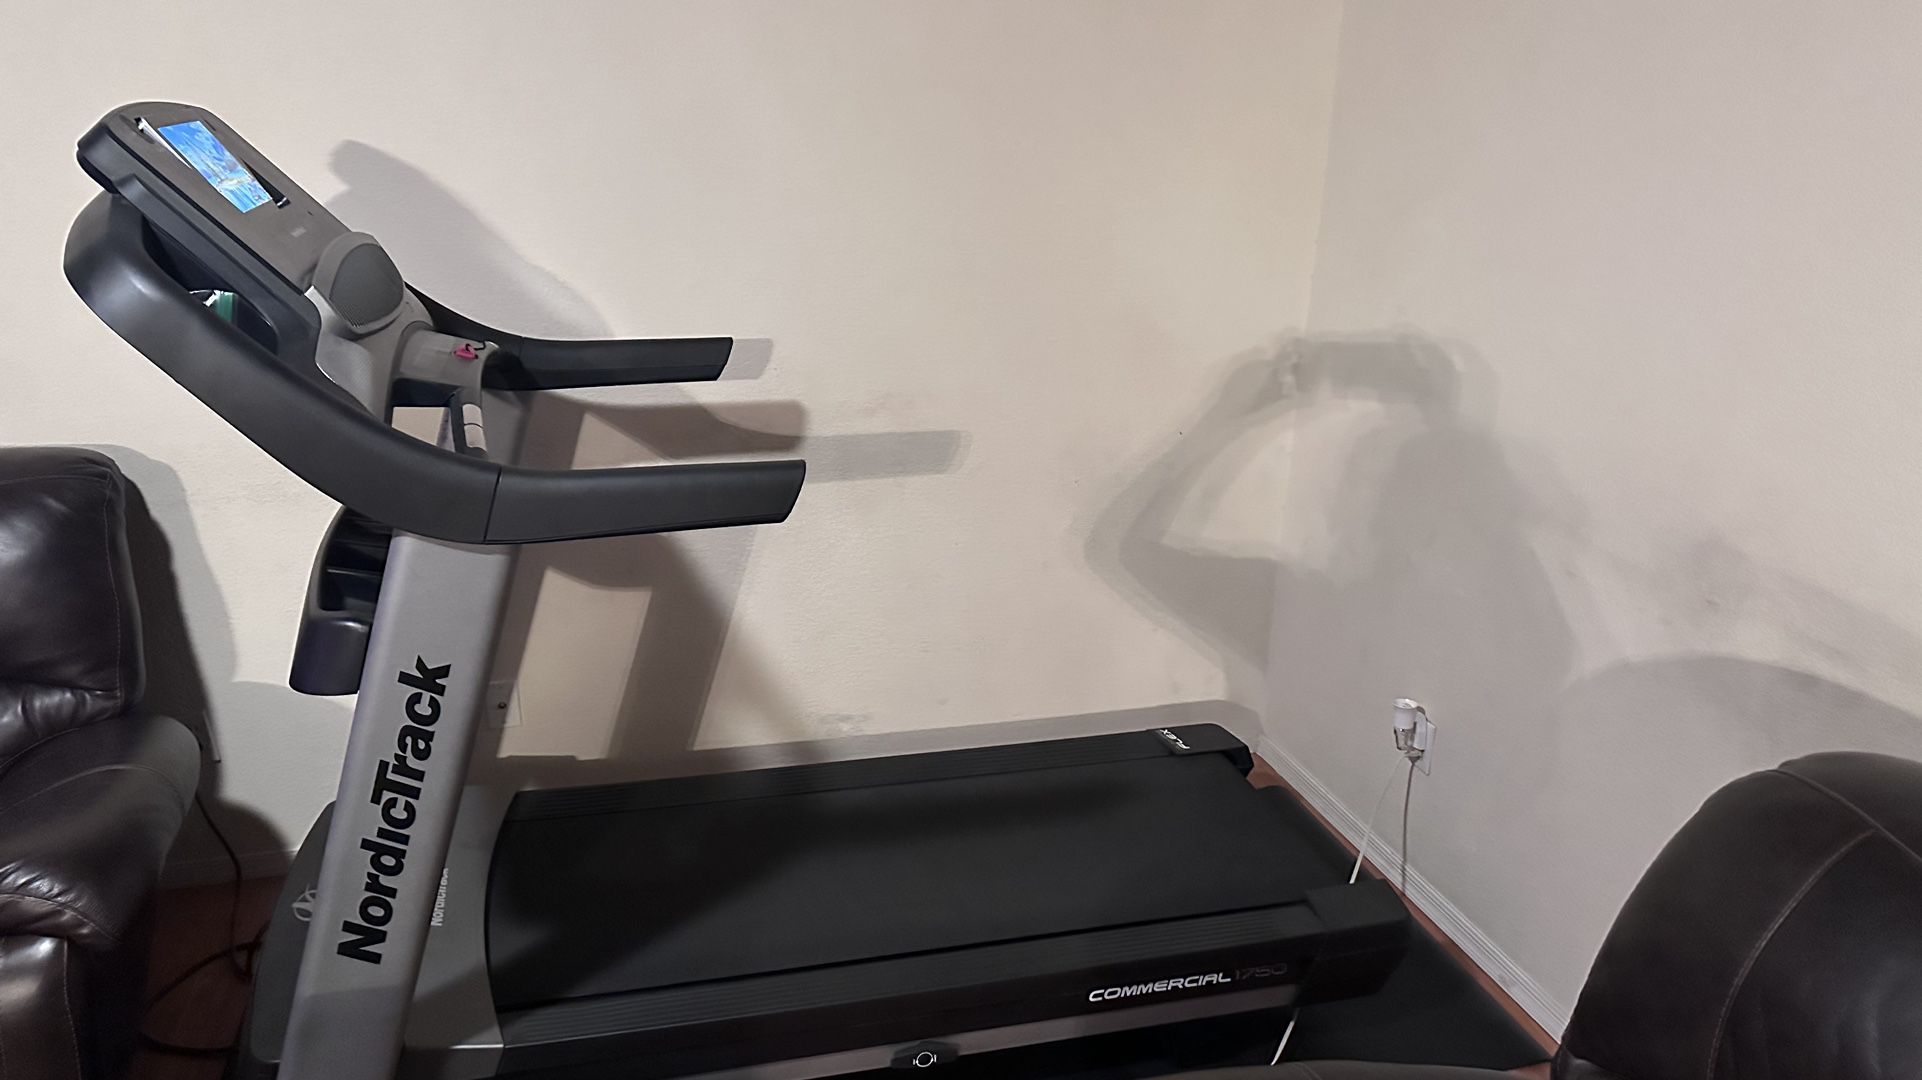 NordicTrack 1750 Treadmill 